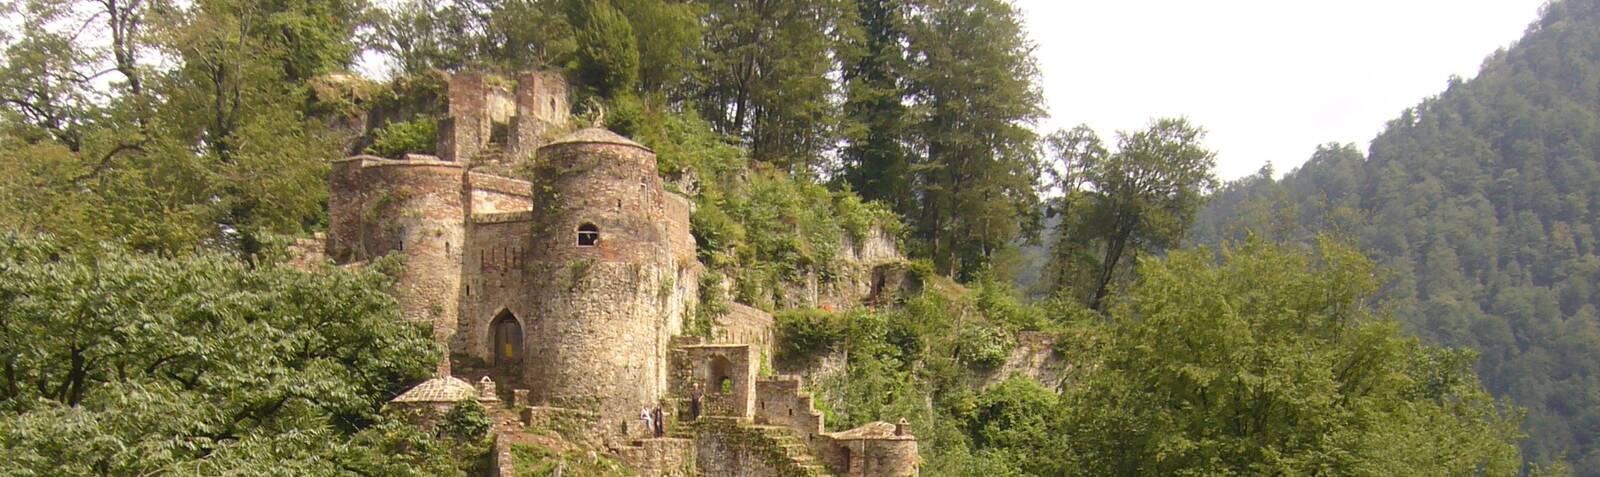 罗德汉城堡(Rodkhan Castle)